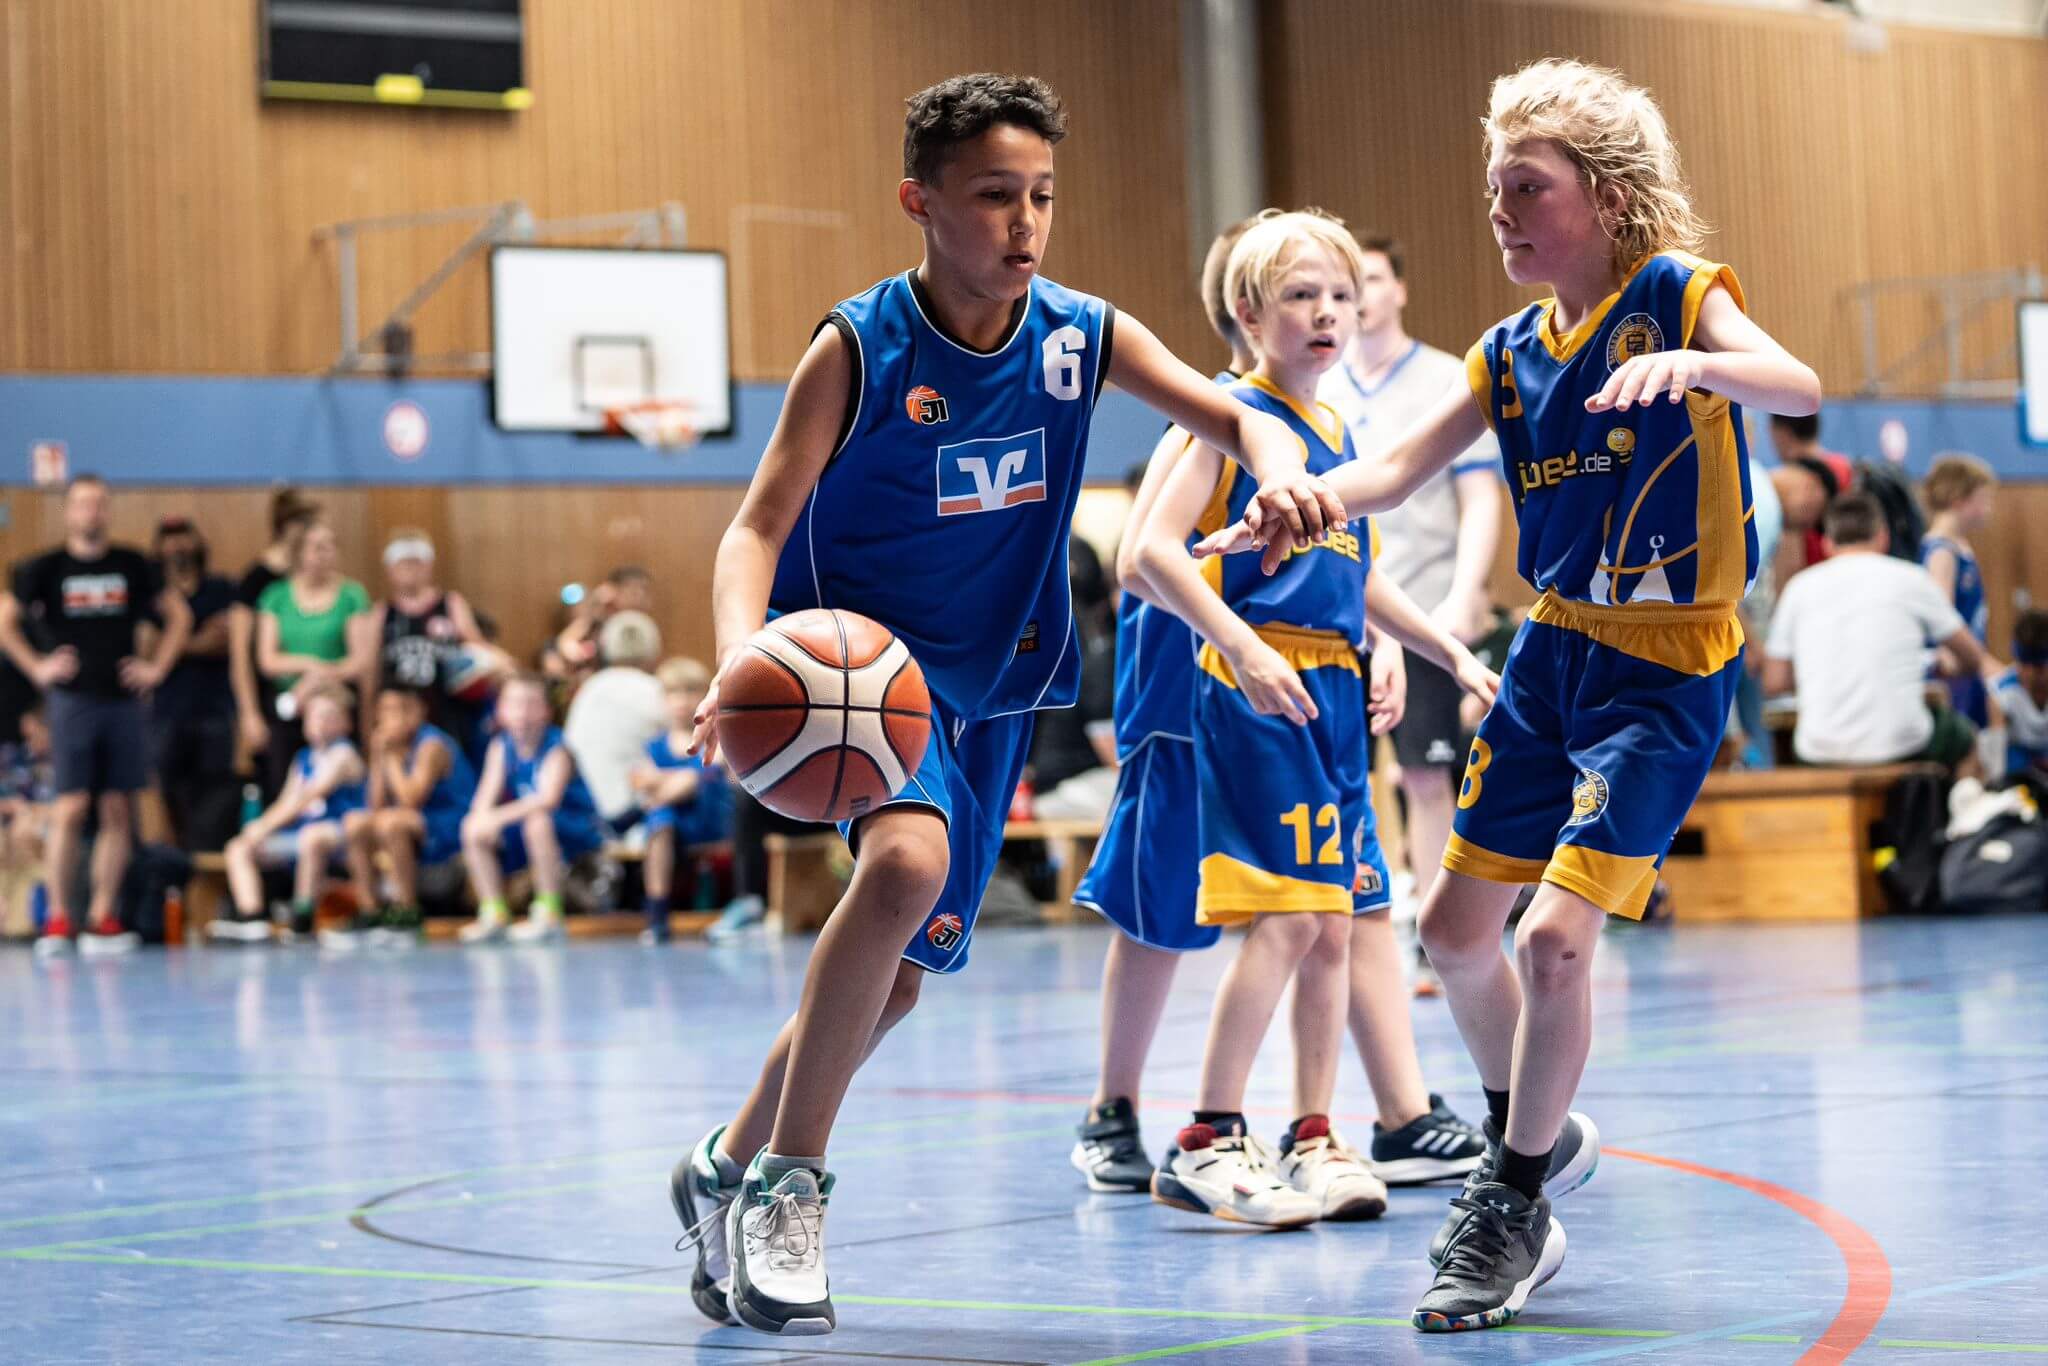 BBC Teams bei Europas größtem Minibasketball Turnier